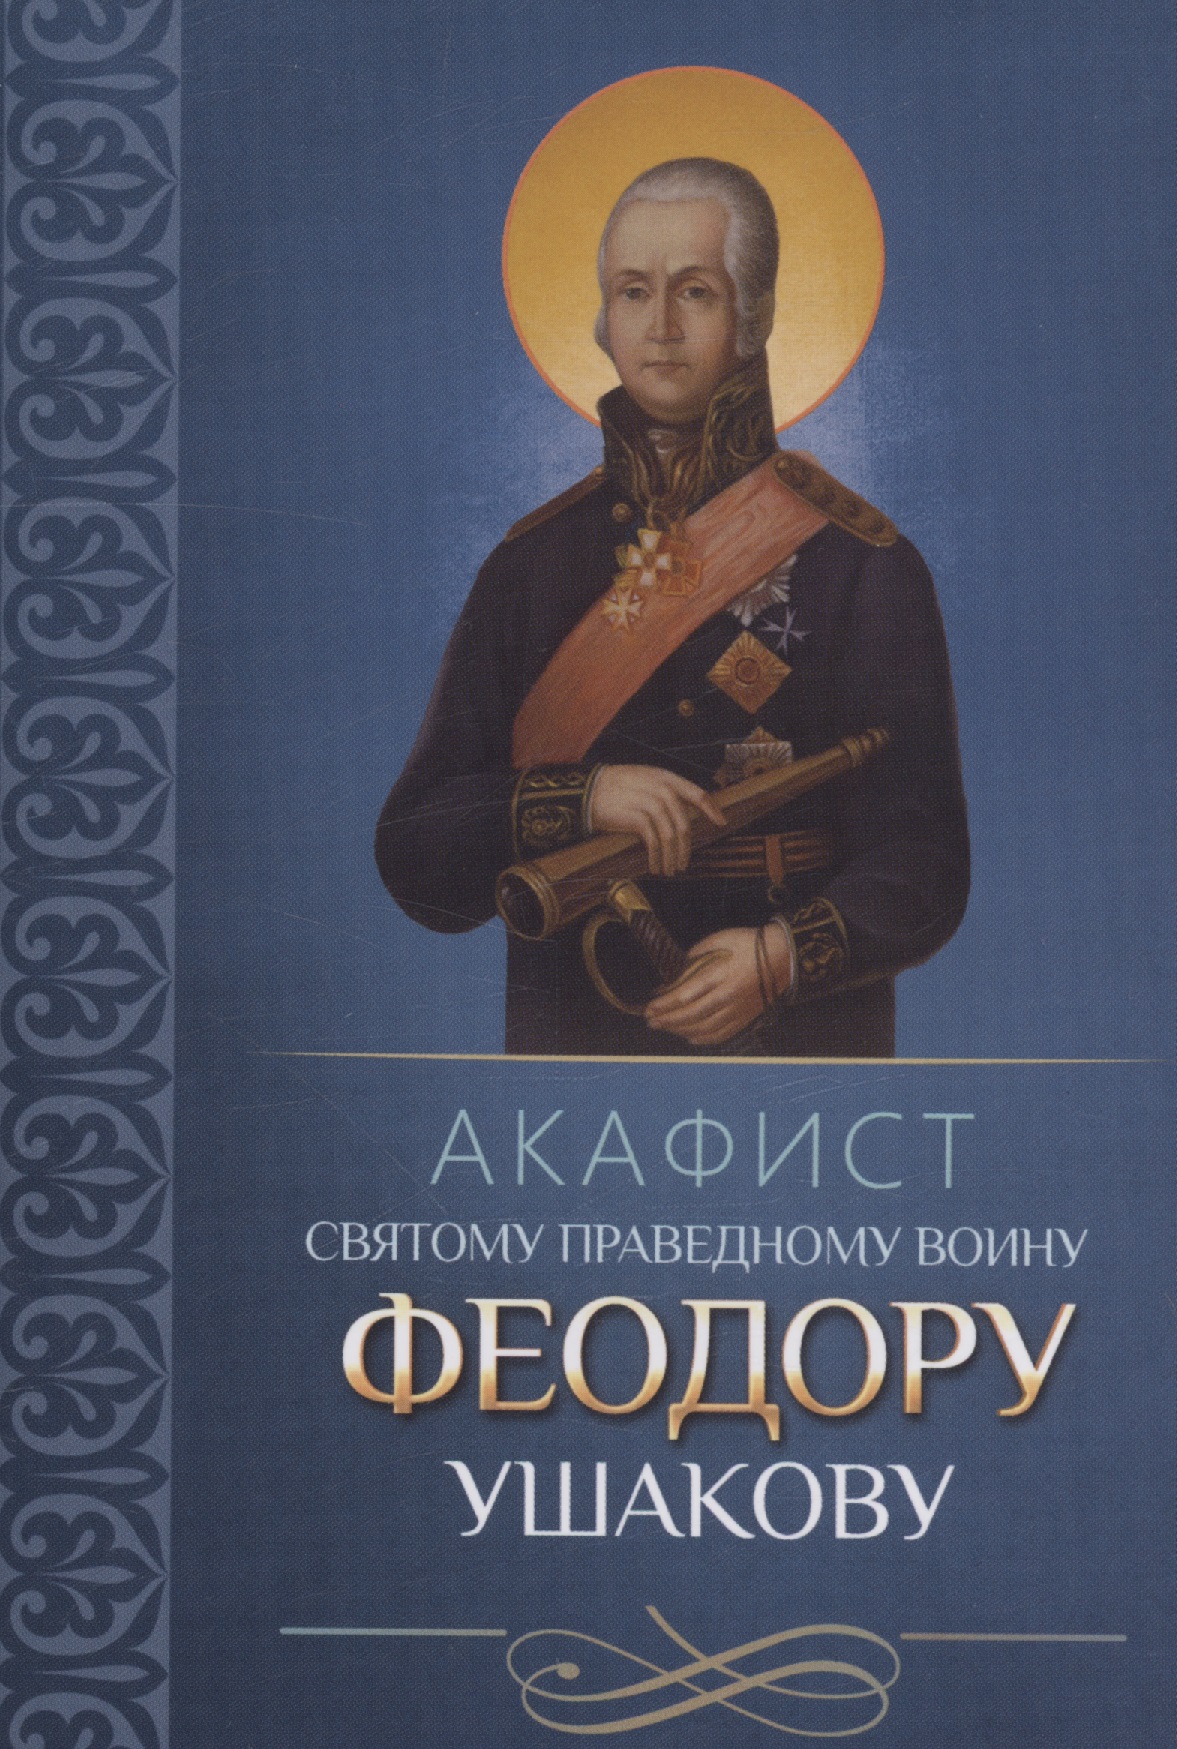  Акафист святому праведному воину Феодору Ушакову